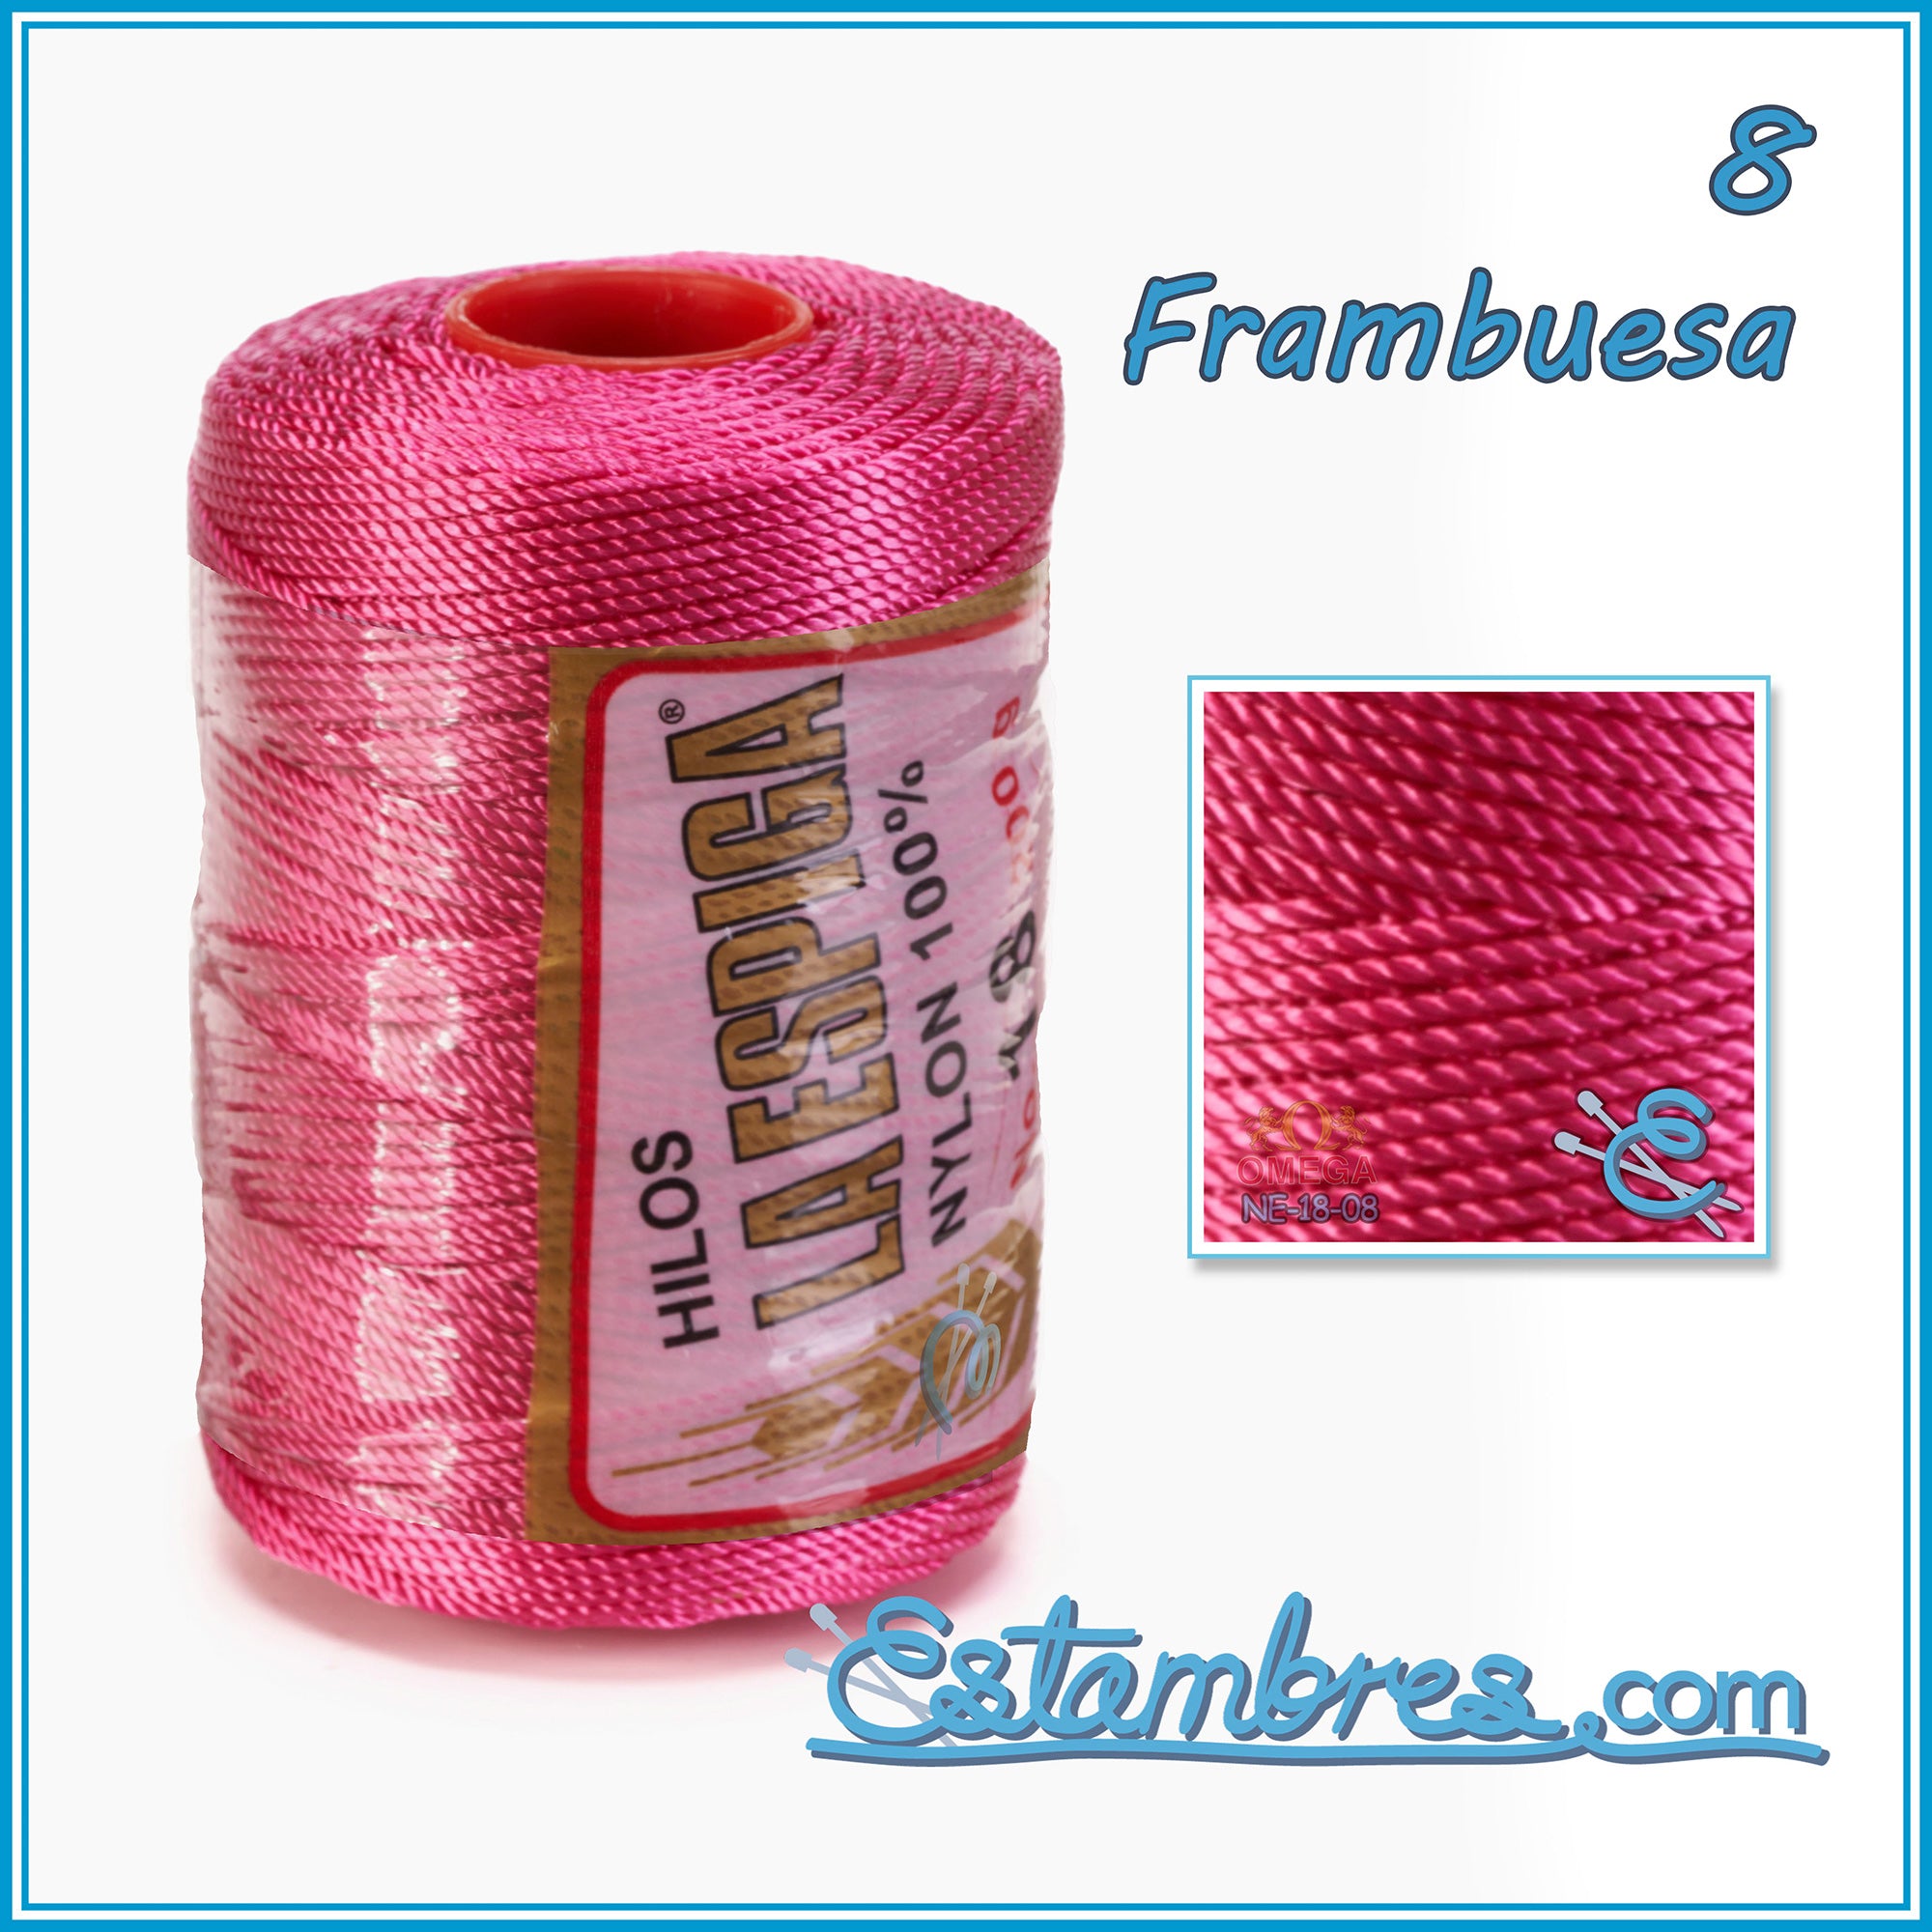 Omega Nylon Crochet Thread Size 18 - La Espiga #18 Turkey